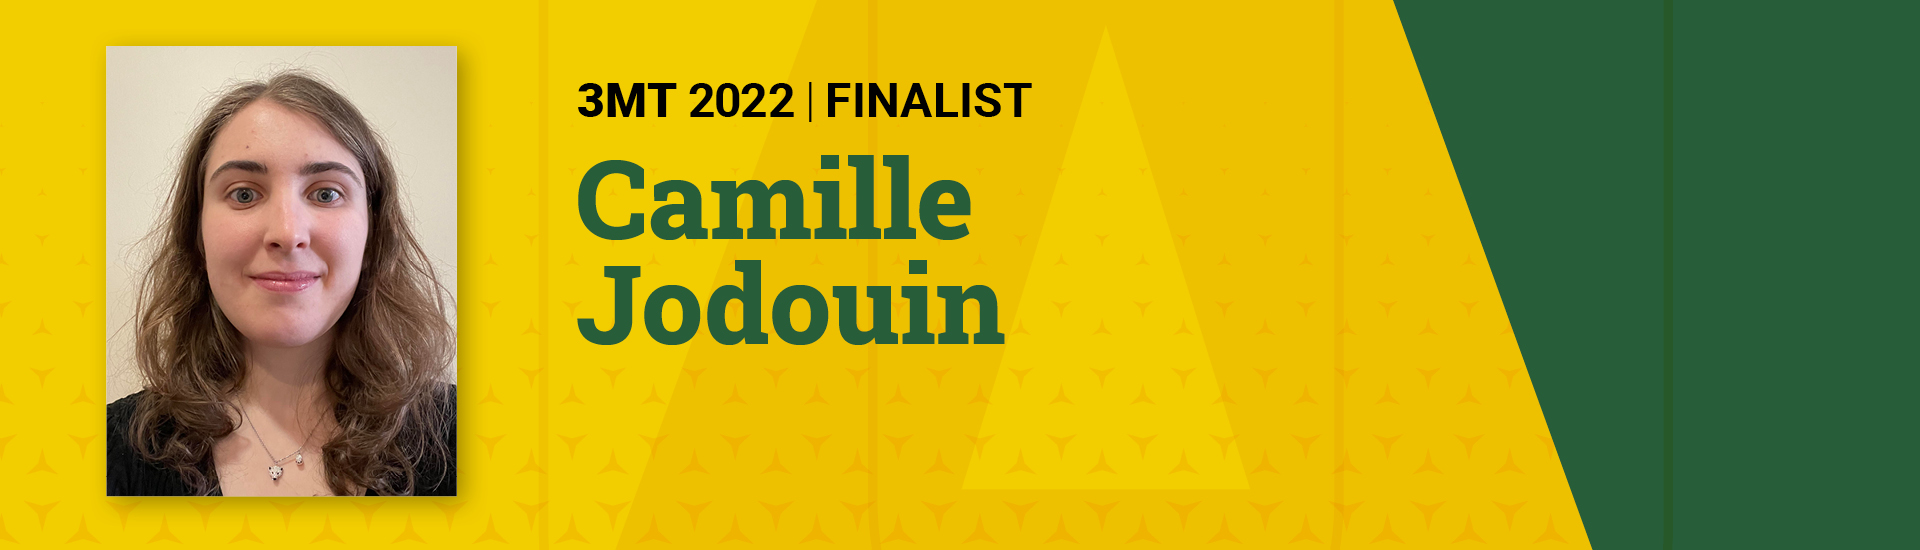 3MT 2022 Finalist Camille Jodouin